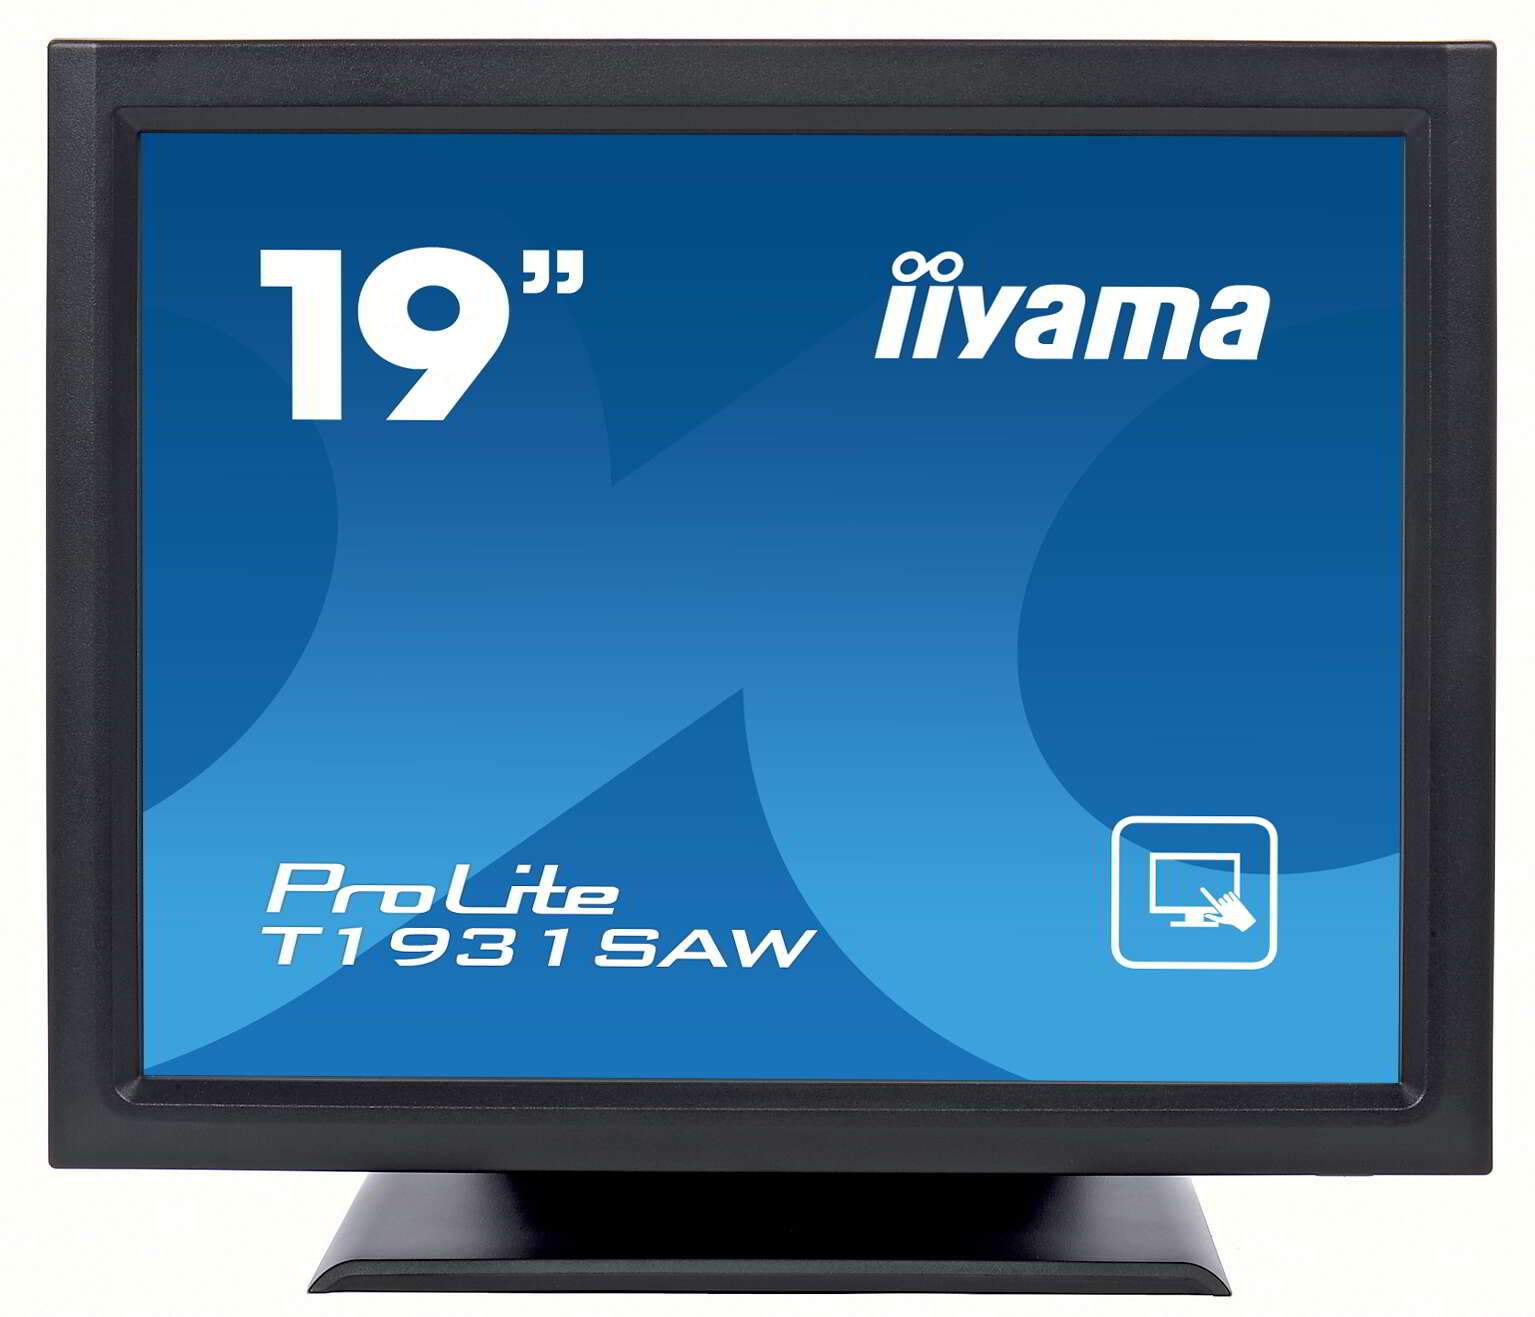 Iiyama 19" t1931saw-b5 prolite monitor